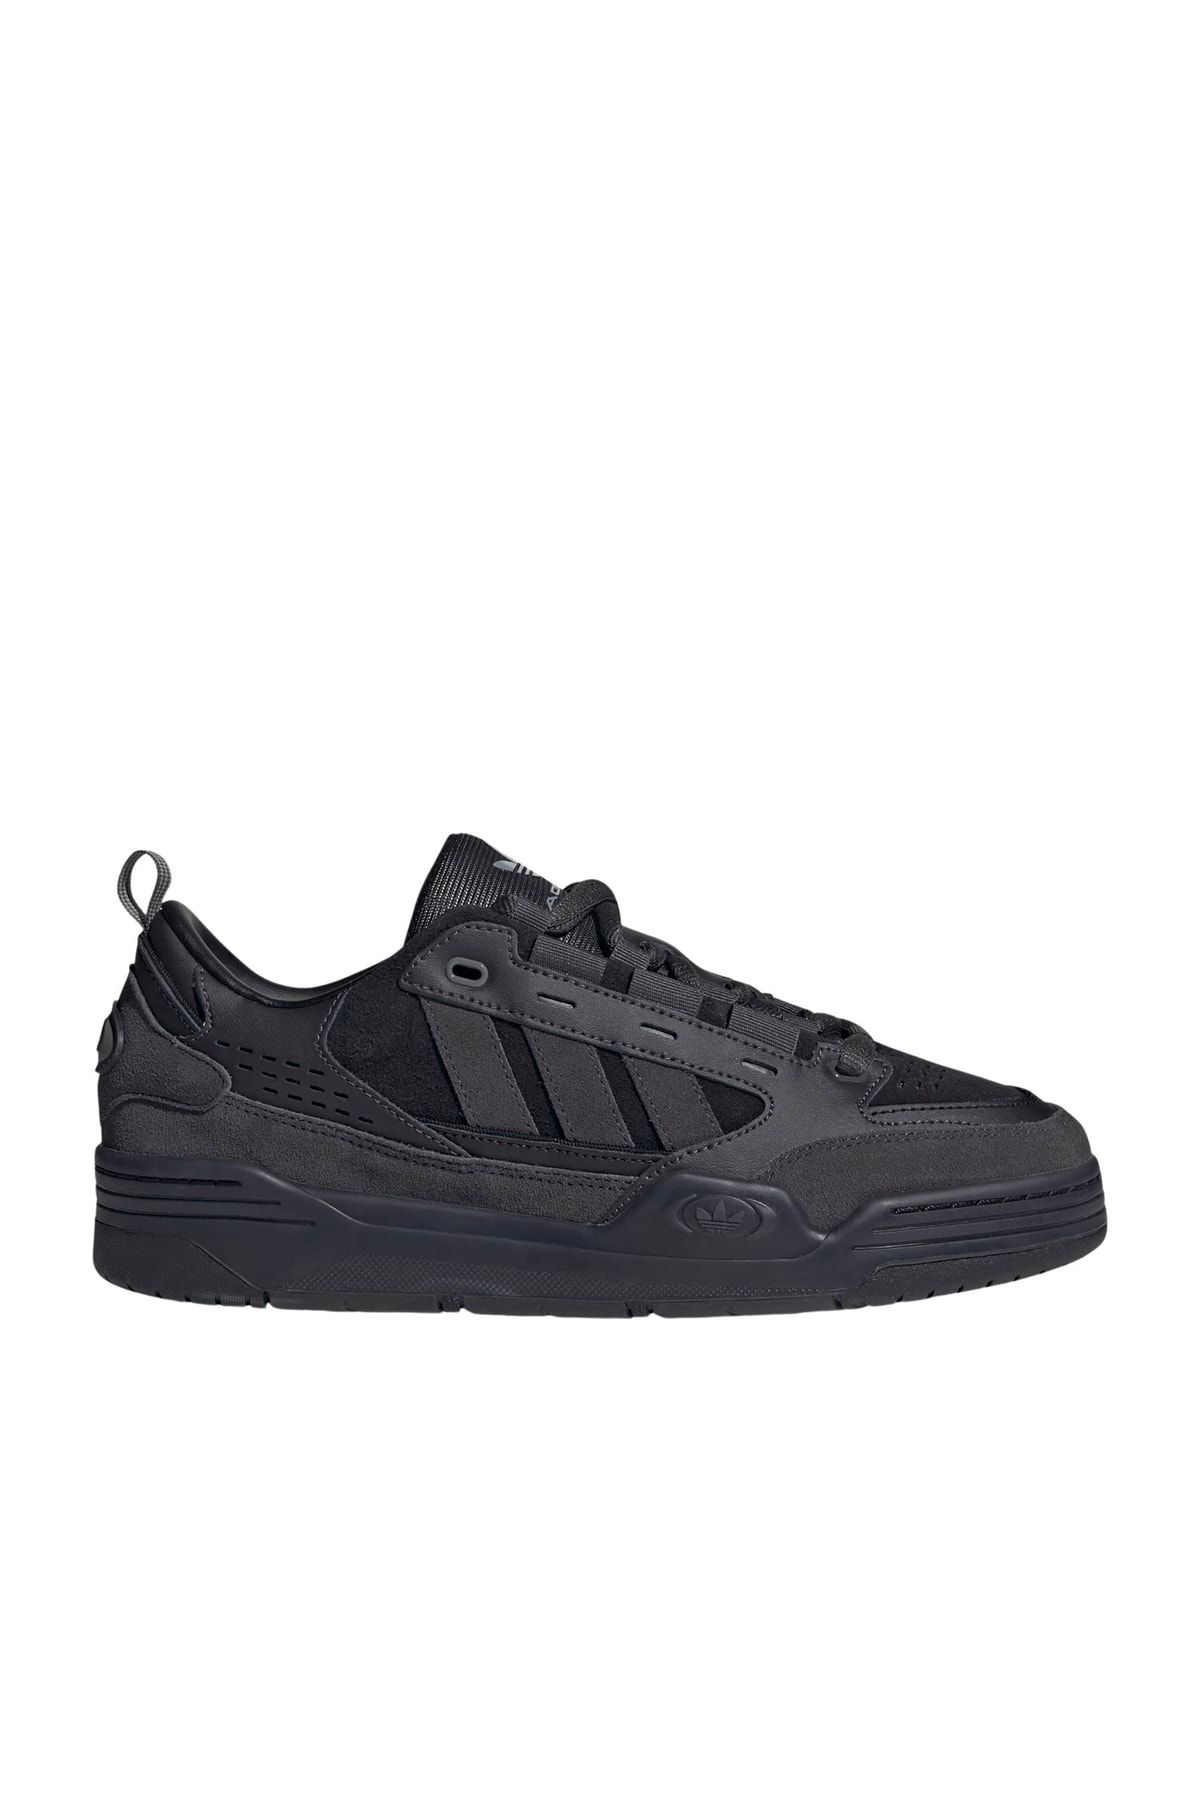 adidas Adi2000 Erkek Siyah Spor Ayakkabı (gx4634)